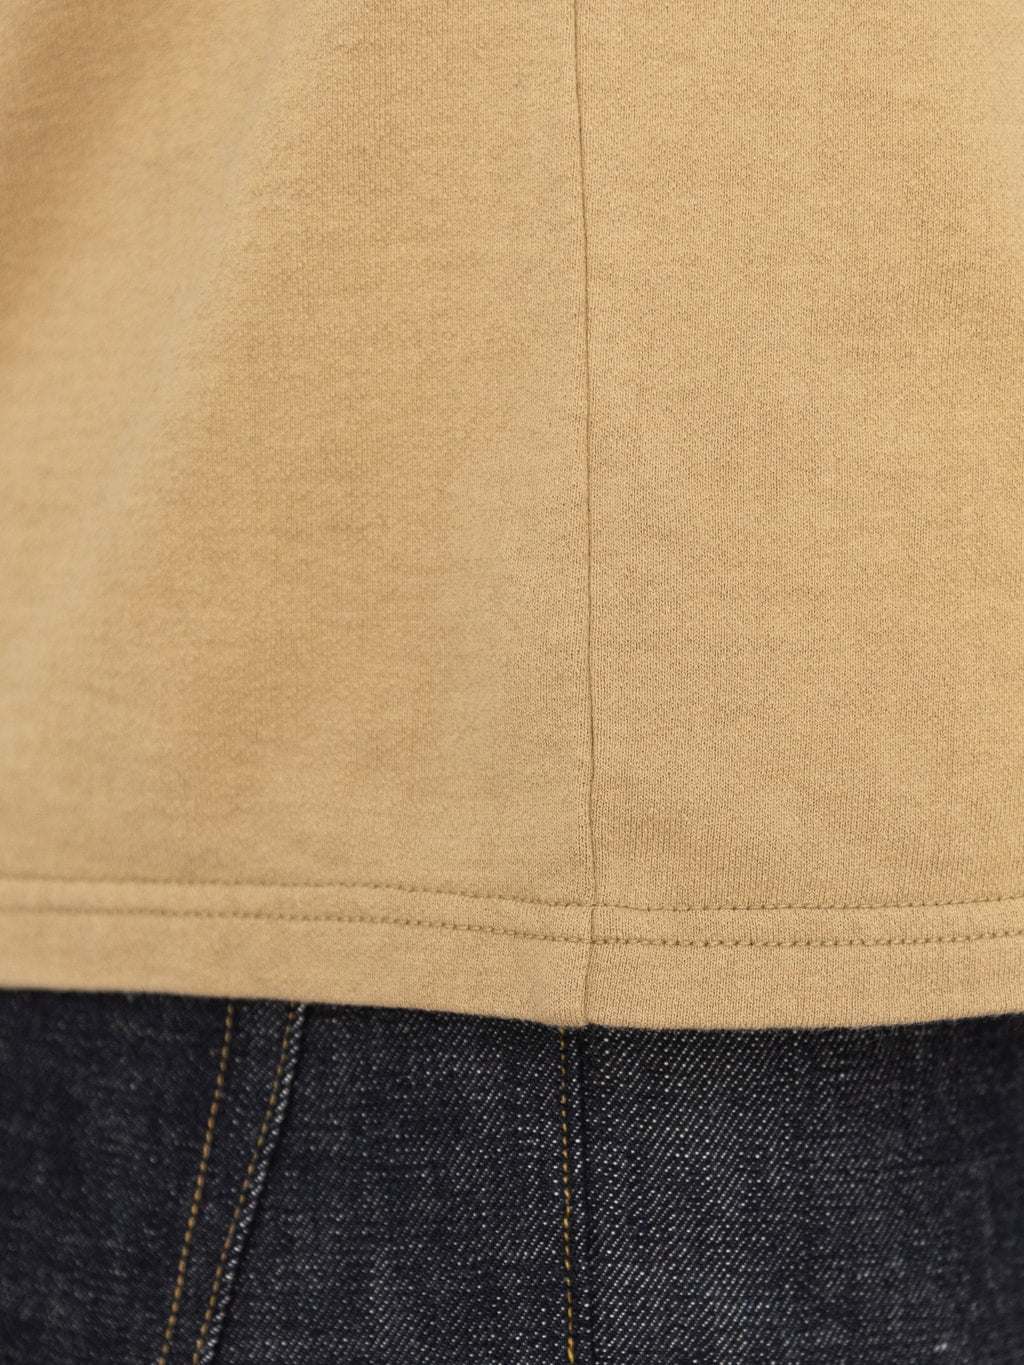 Samurai Jeans Loopwheel Ripened Cotton Tshirt kuri chestnut cotton fabric closeup